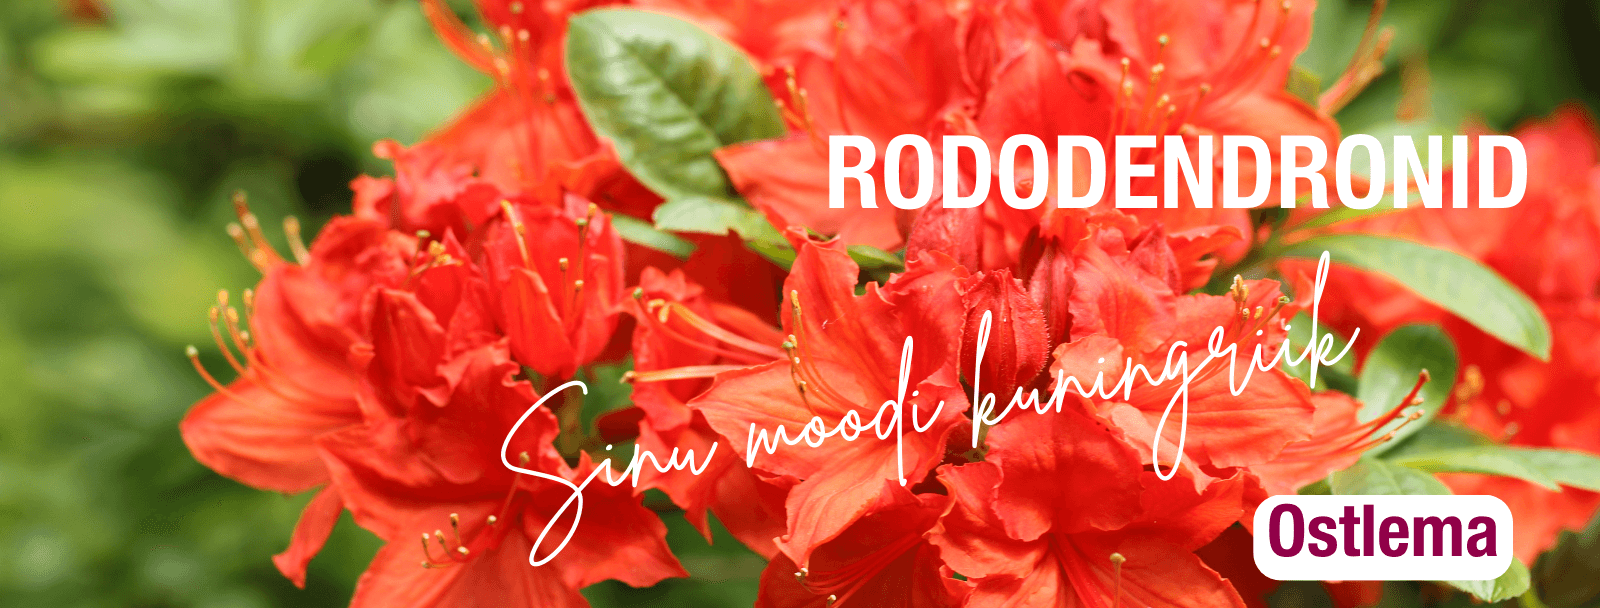 rodokuningriik rododendronid rodoaed